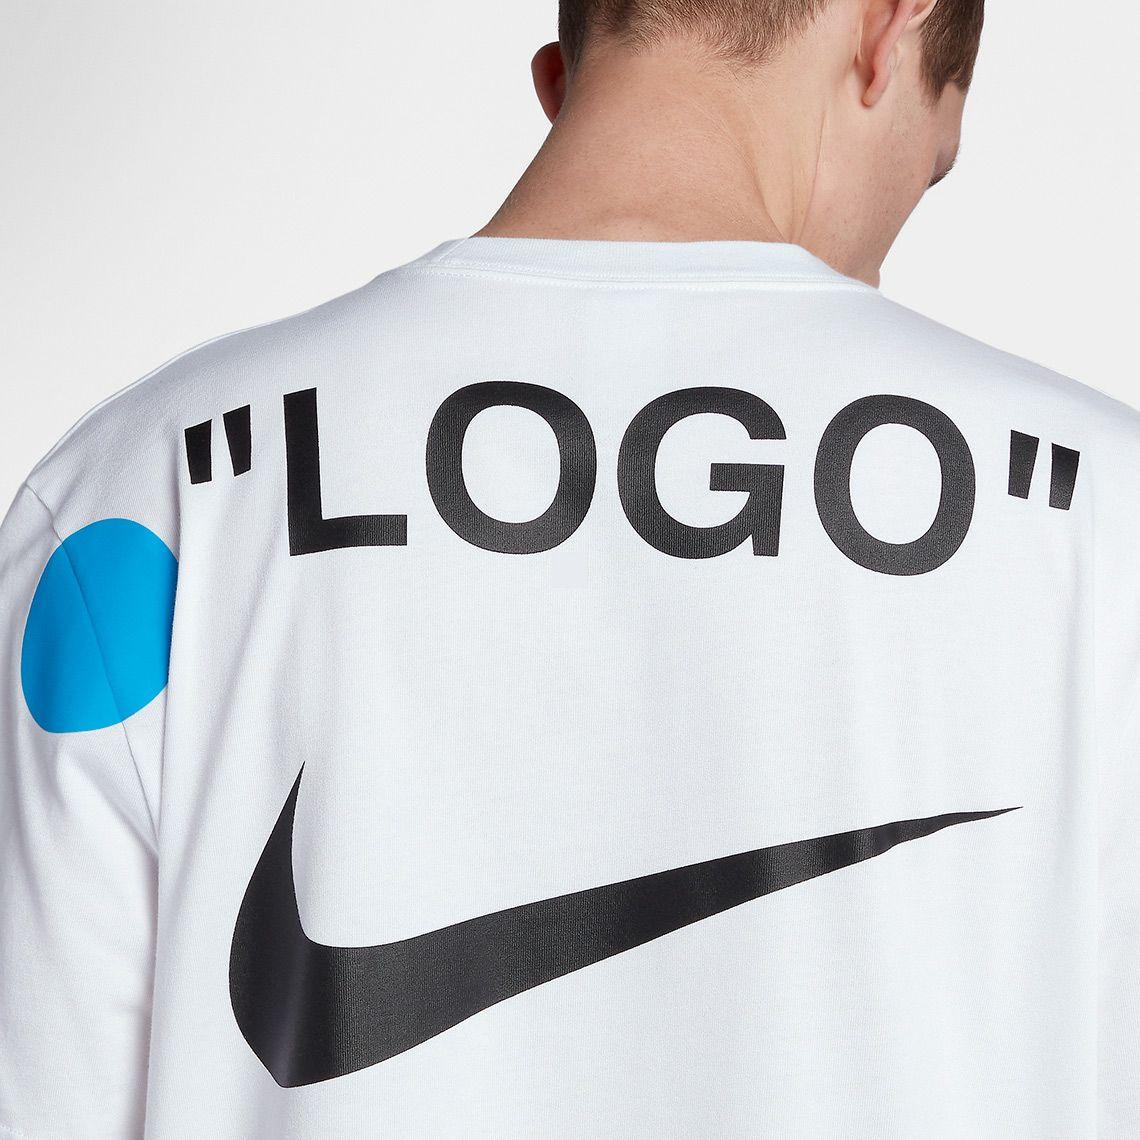 Off White Nike Logo - OFF WHITE Nike Football Apparel Release Info | SneakerNews.com